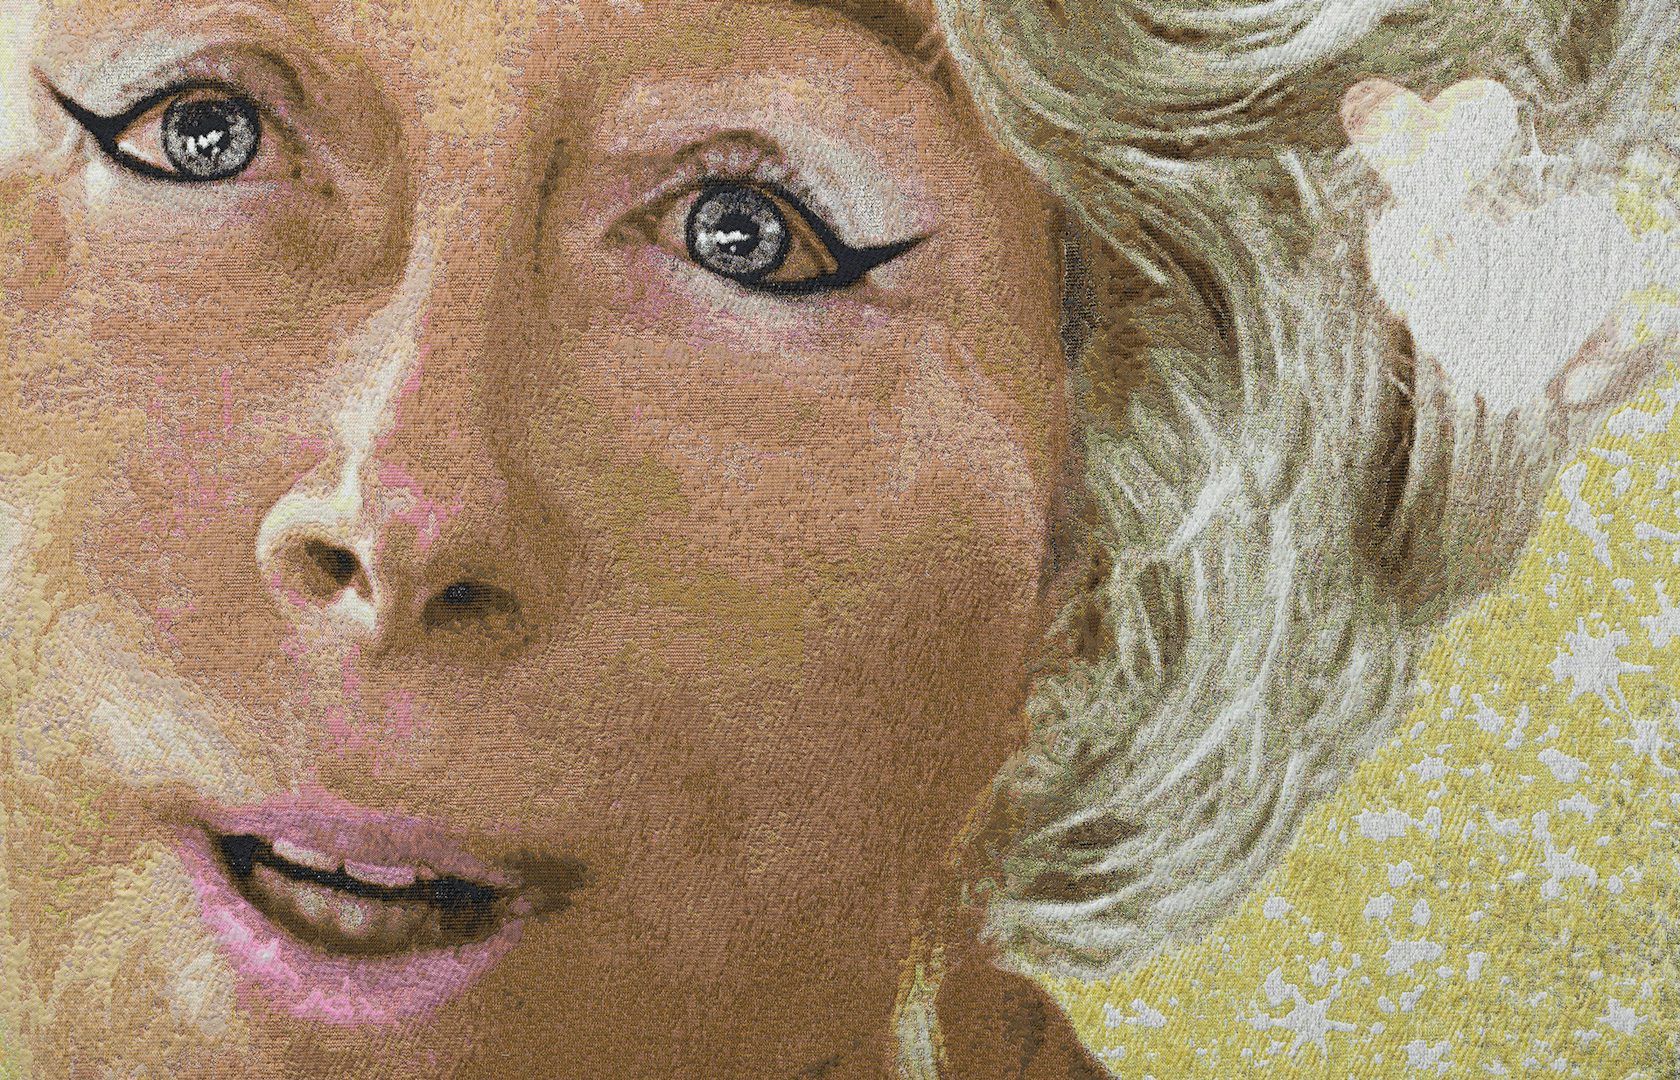 How Cindy Sherman Redefined Self-Portraiture (7 Artworks)